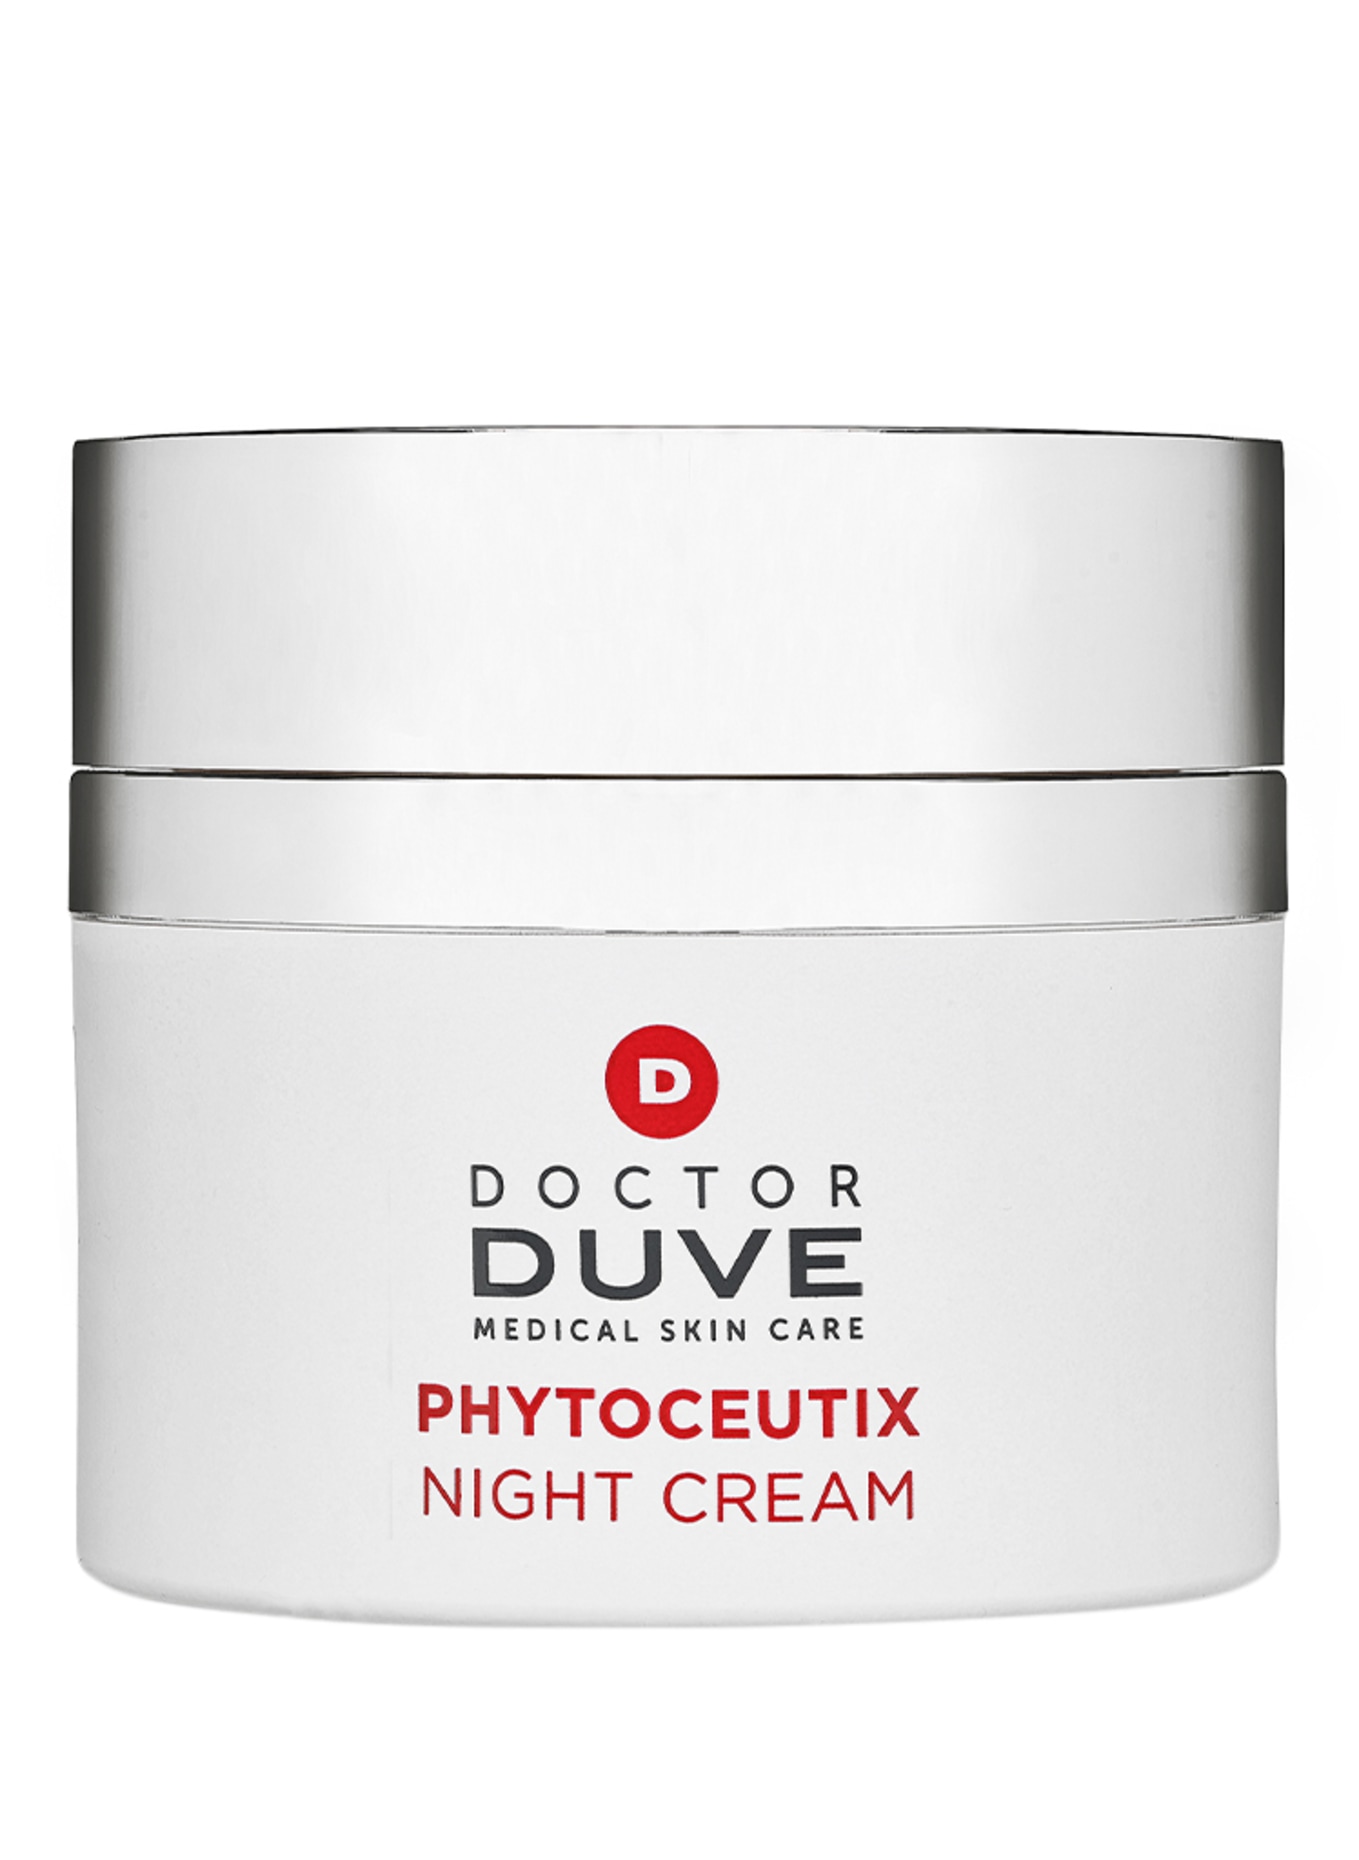 DOCTOR DUVE PHYTOCEUTIX NIGHT CREAM (Bild 1)